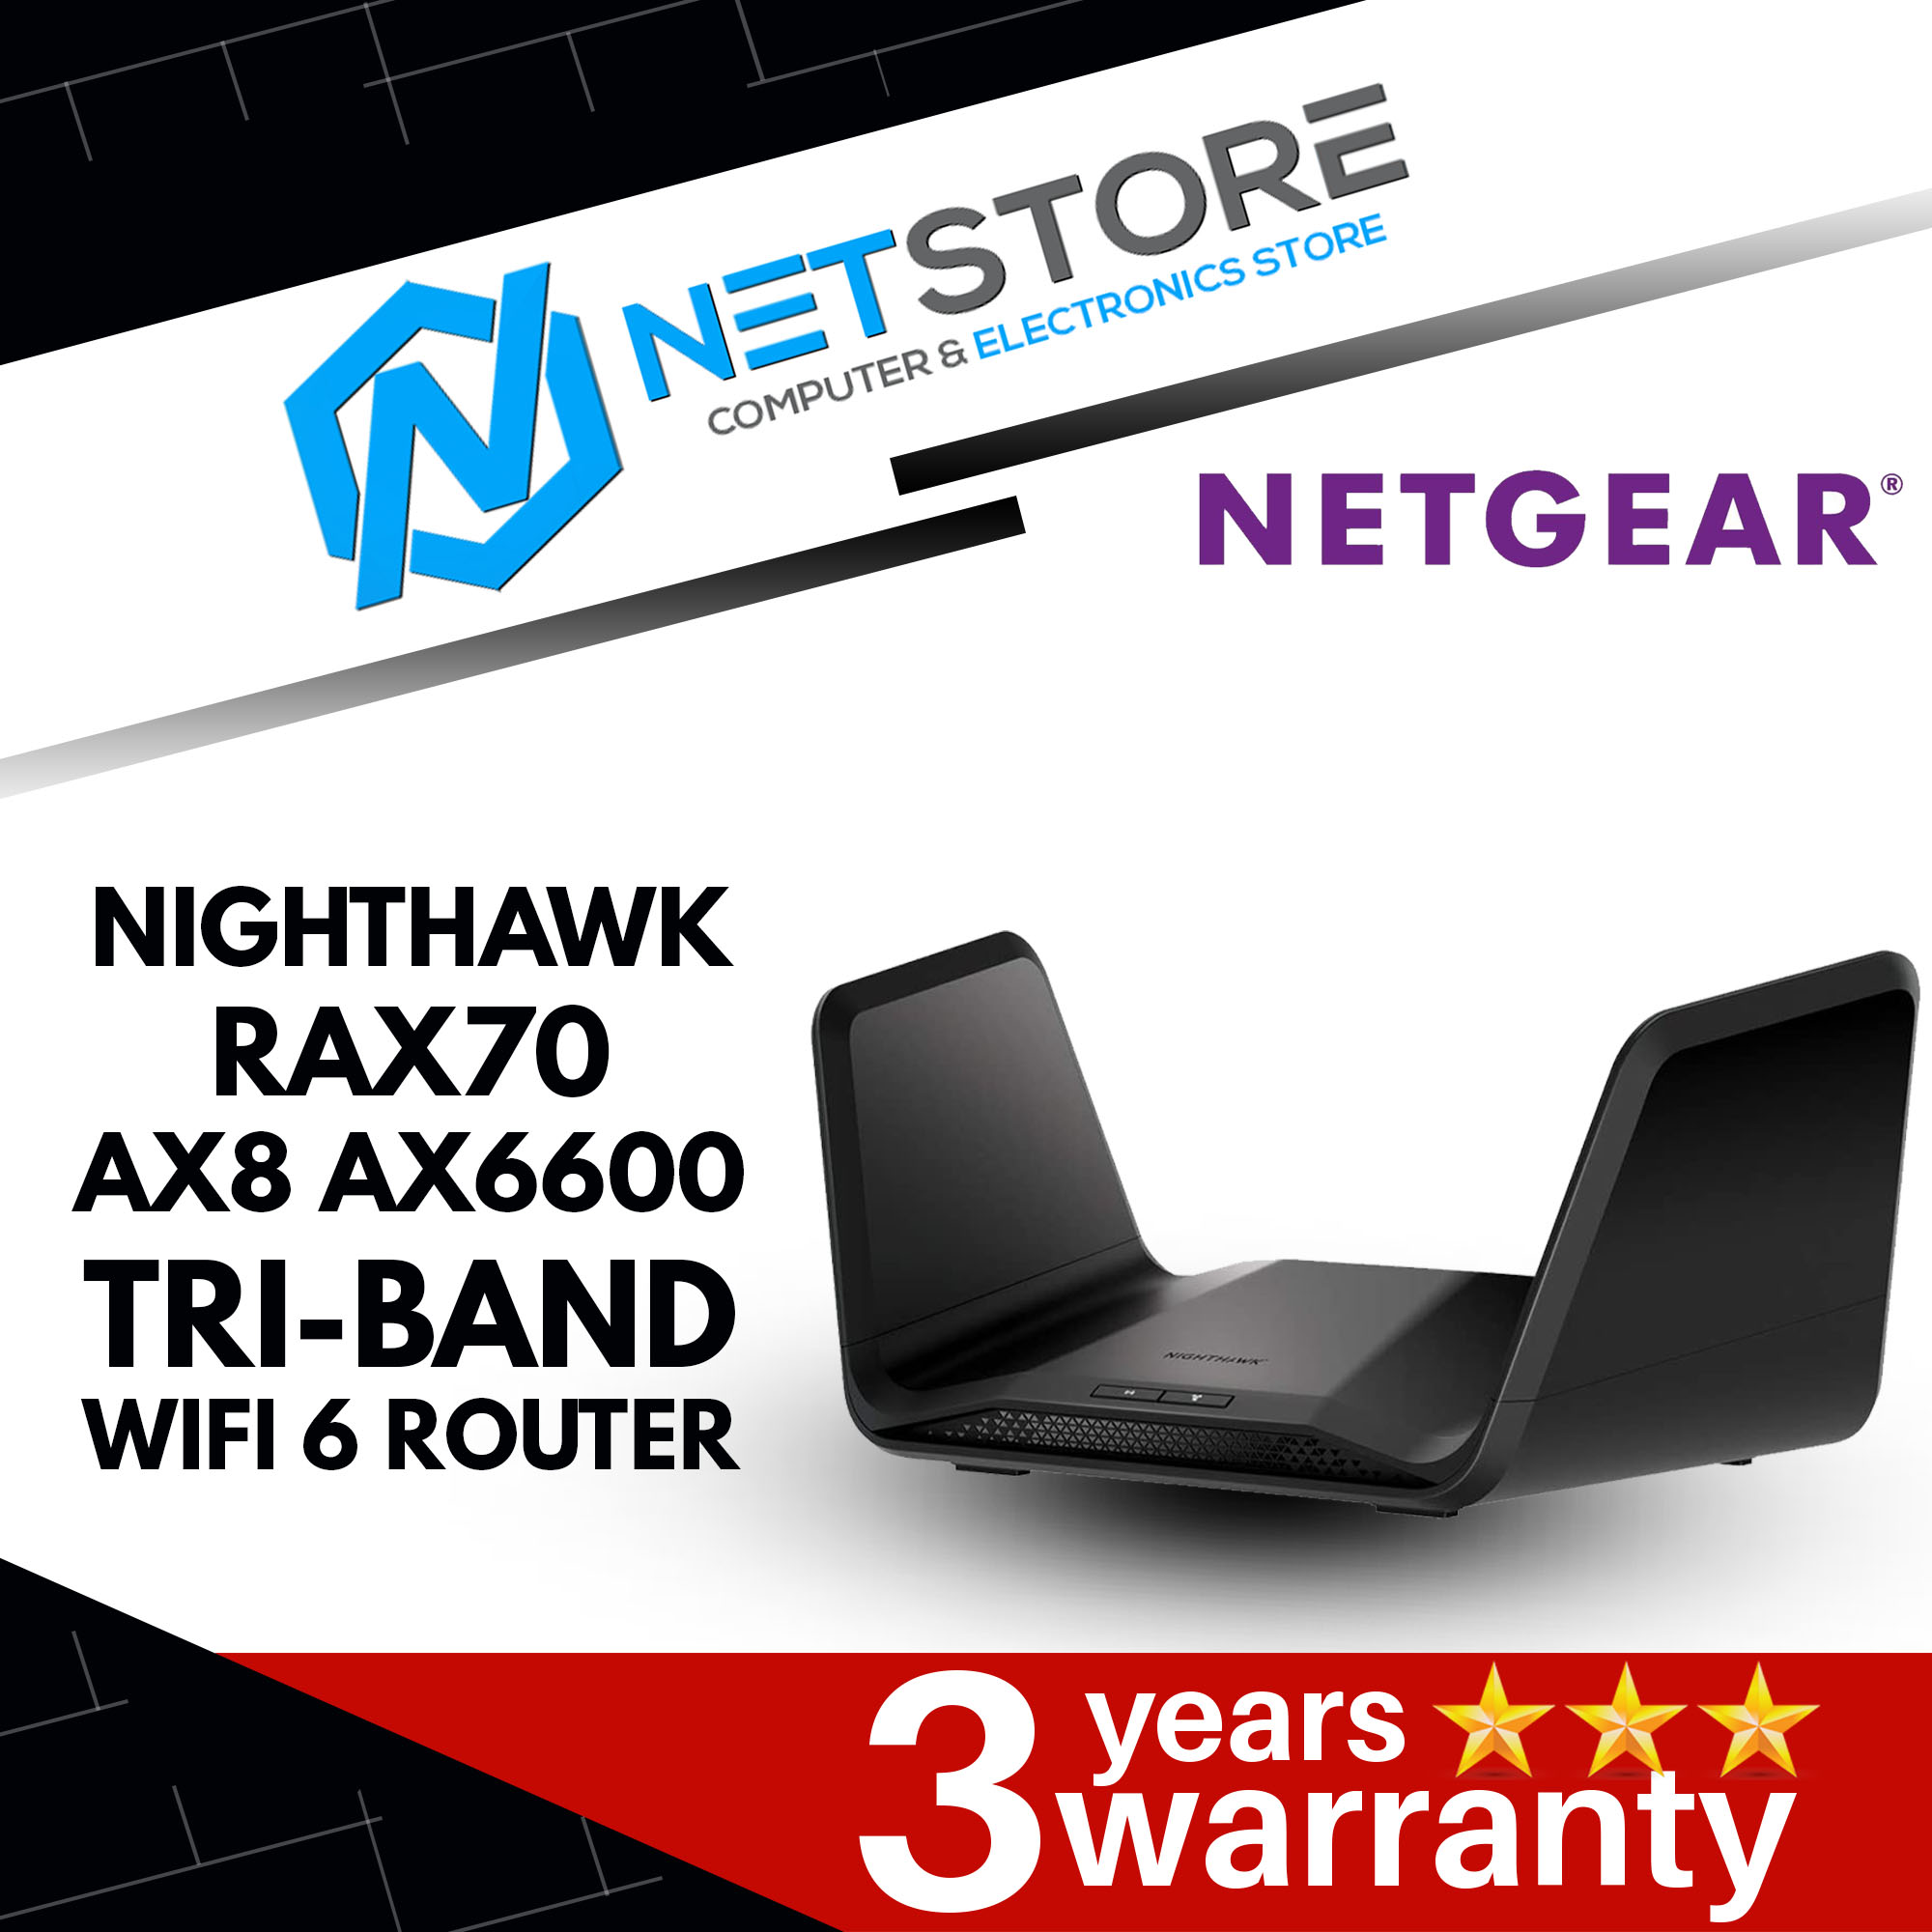 NETGEAR NIGHTHAWK RAX70 AX8 AX6600 TRI-BAND WIFI 6 ROUTER